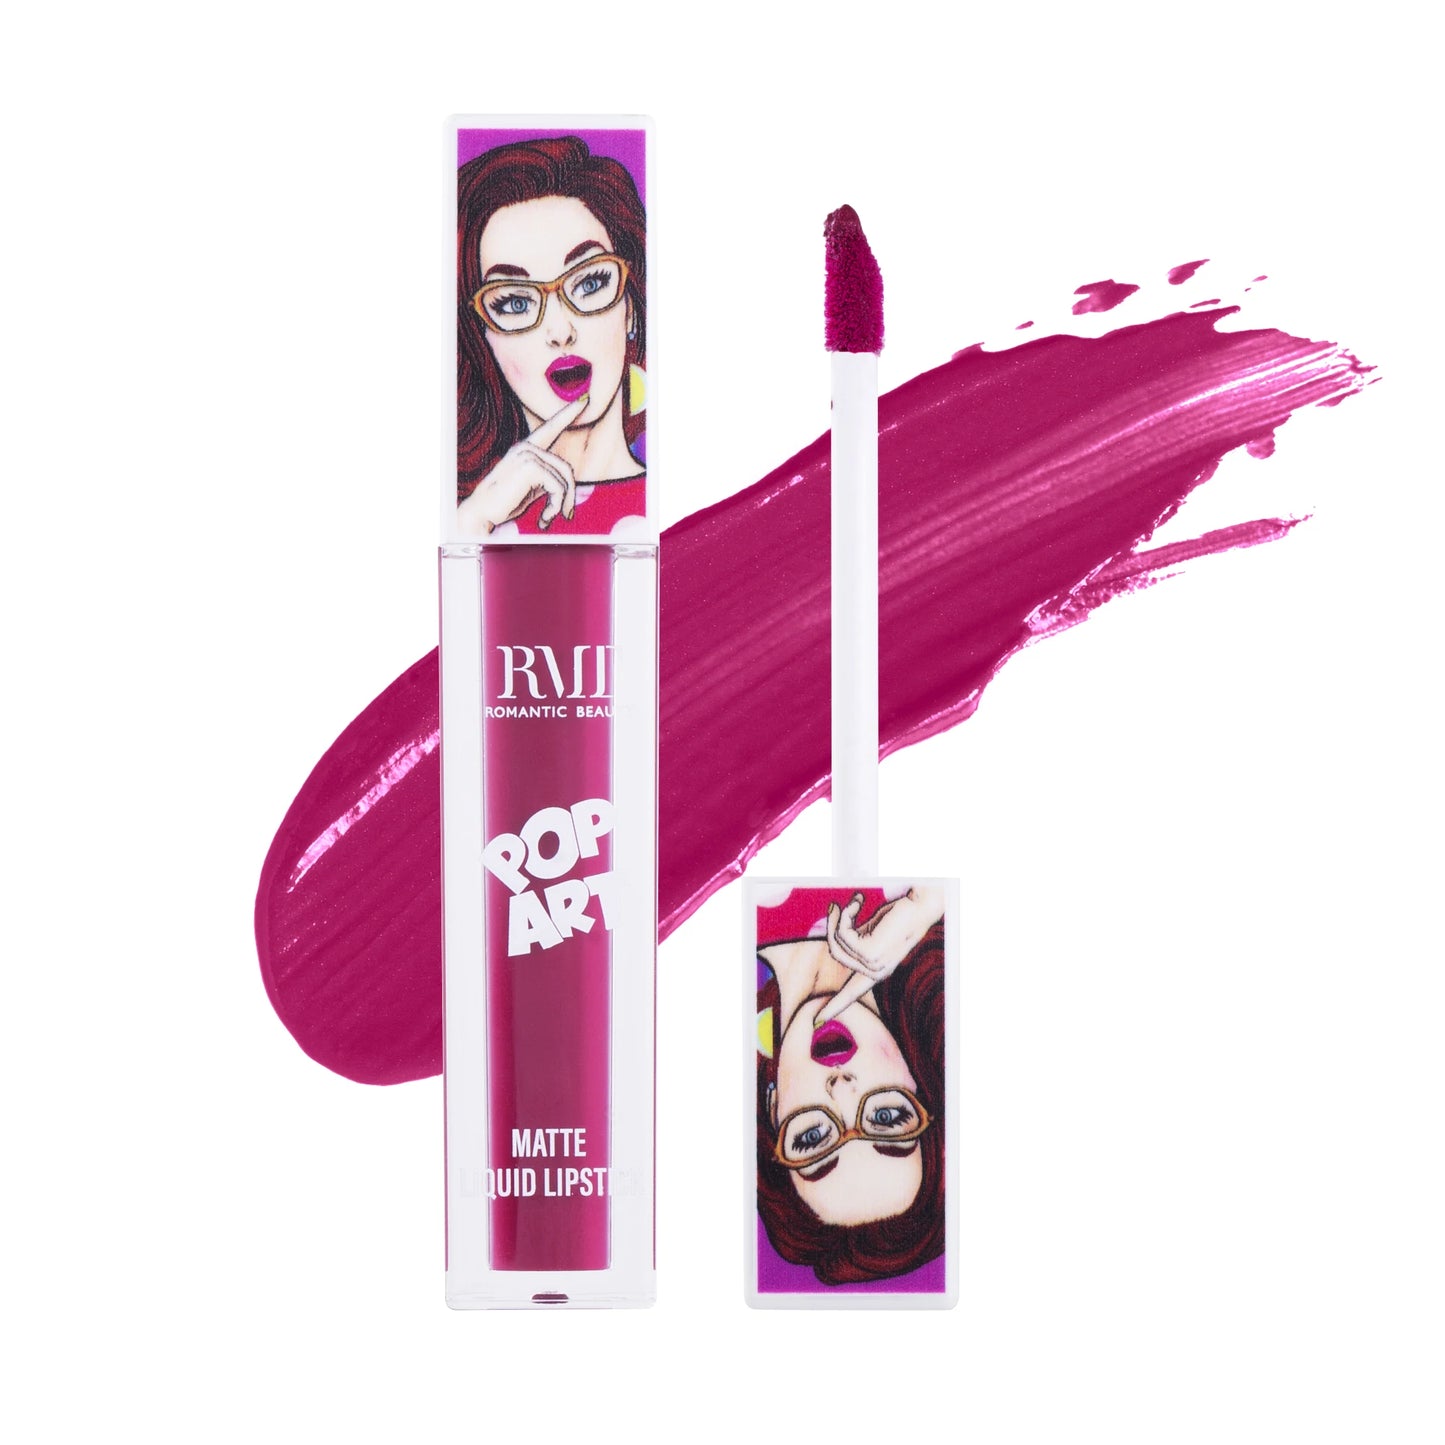 Pop Art Liquid Lipstick